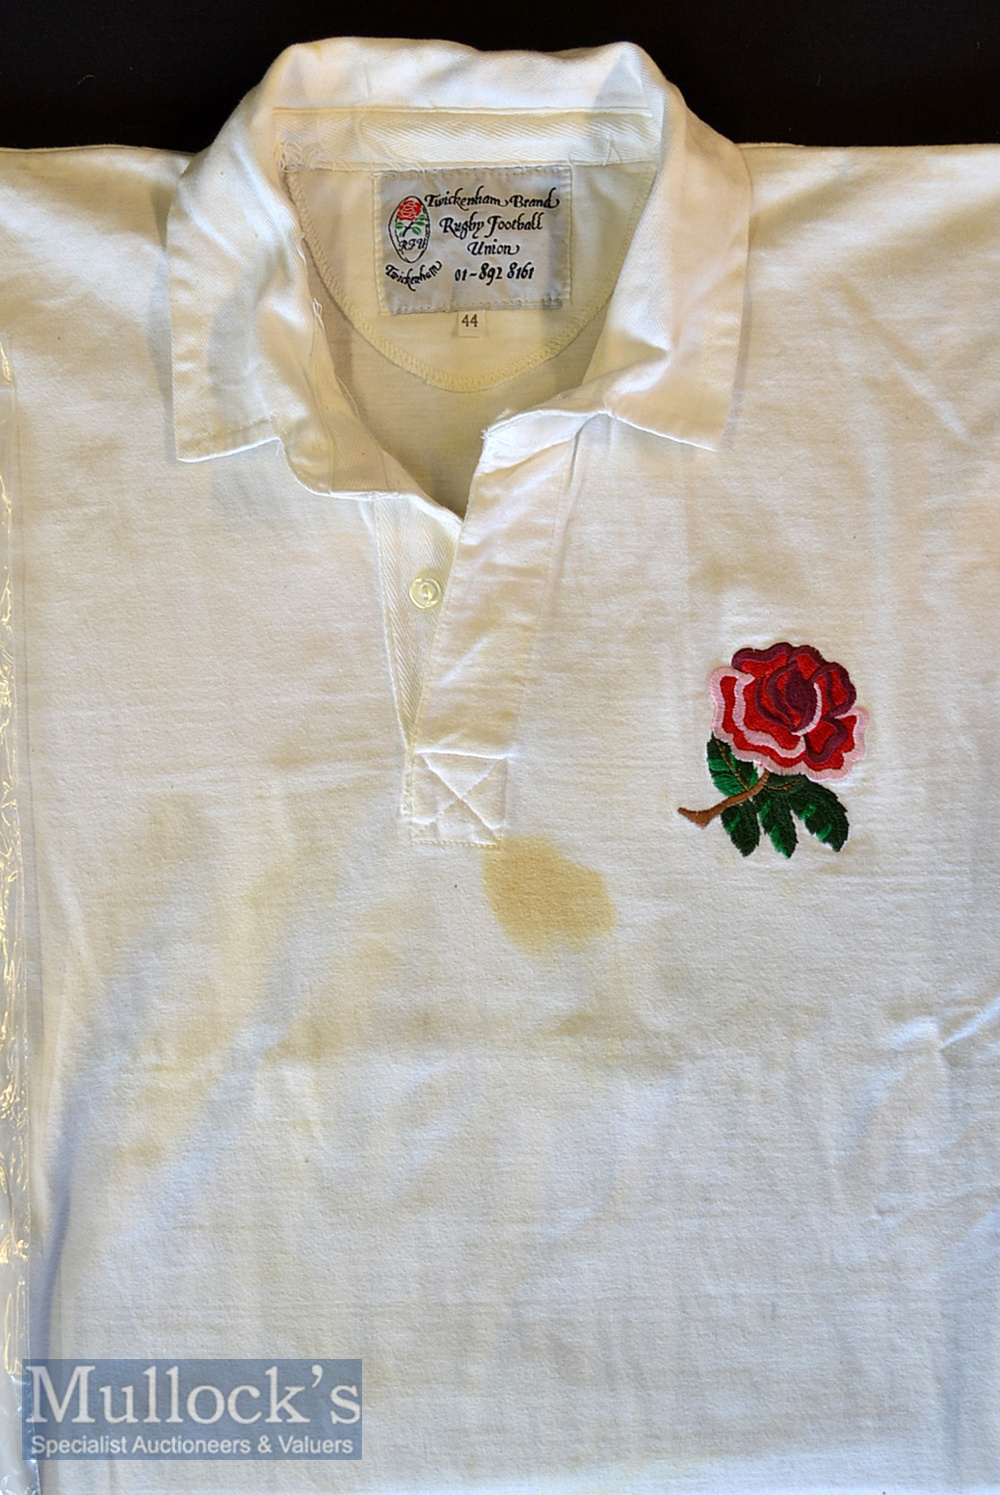 1990 Jeff Probyn England v Wales Match worn Rugby Jersey: RFU’s own brand 44” No. 3 Jersey worn by